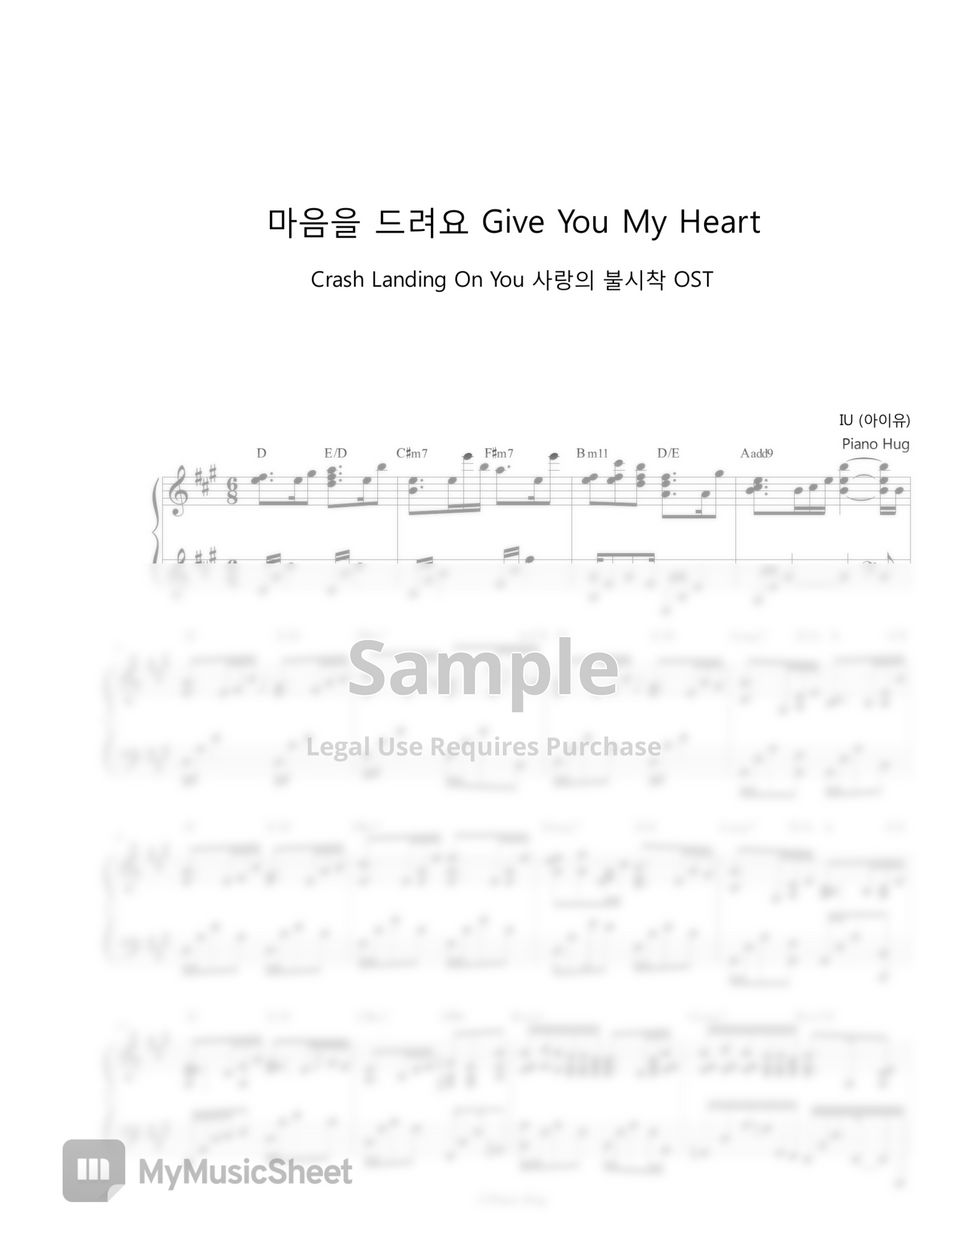 Crash Landing On You (사랑의 불시착) OST - IU (아이유) - Give You My Heart (마음을 드려요) by Piano Hug